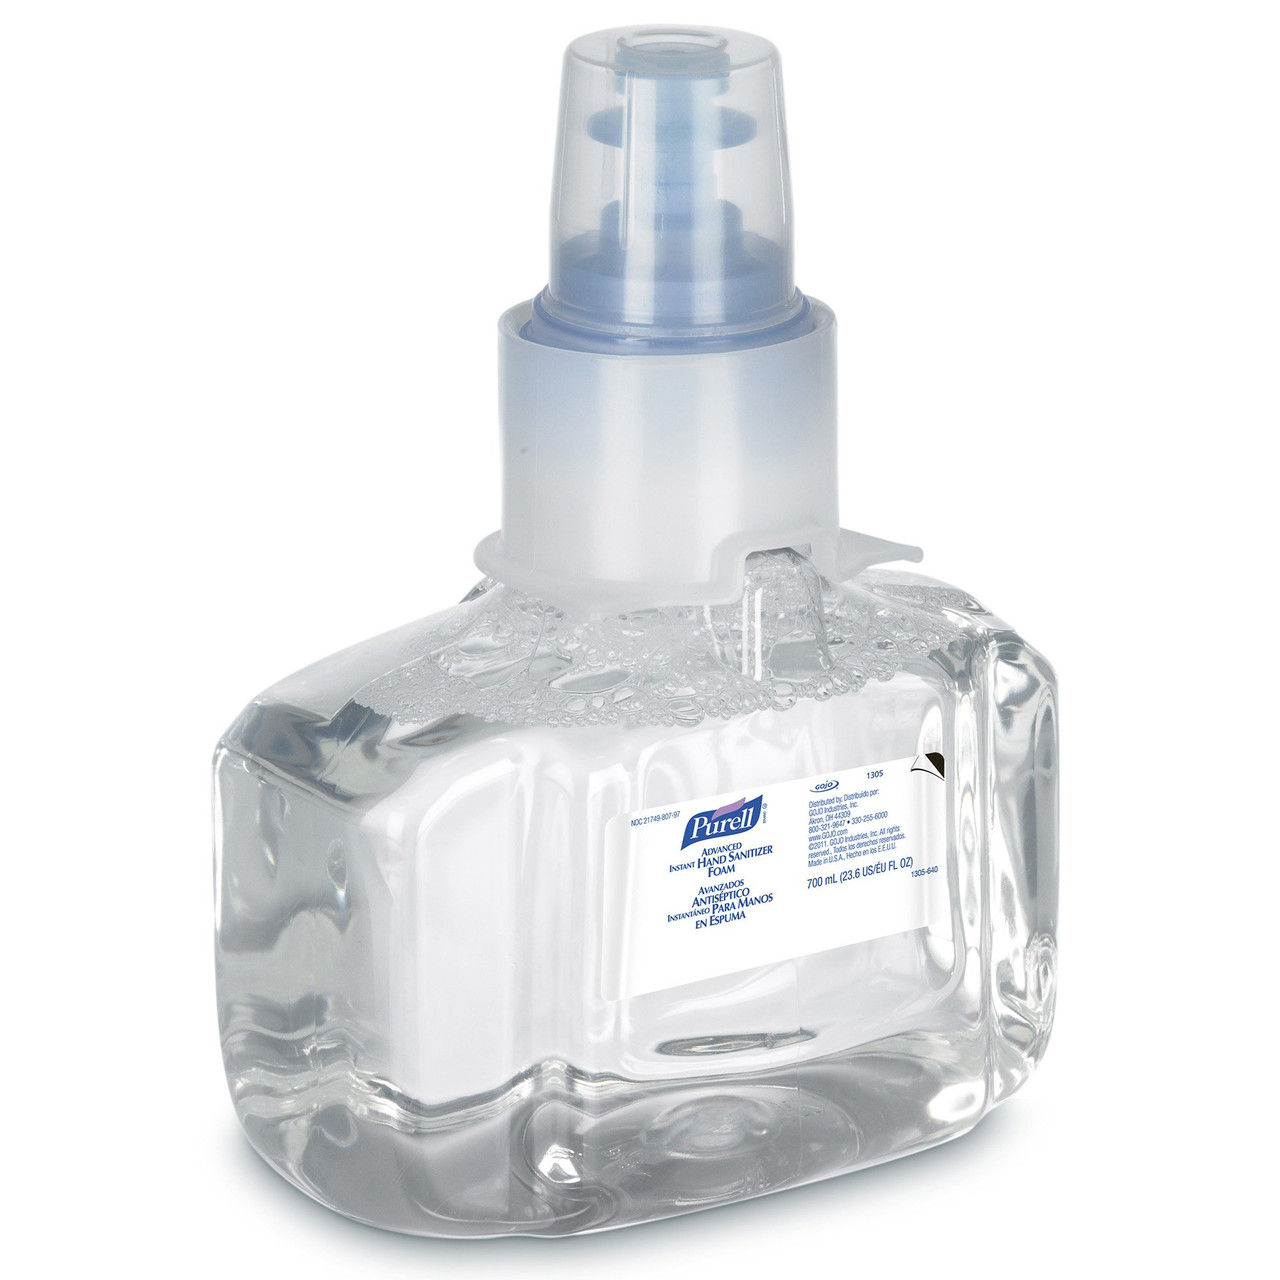 Purell Advanced Gel Hand Sanitizer 1 Liter Refill Bag (2 Pack) 73852291322  | eBay